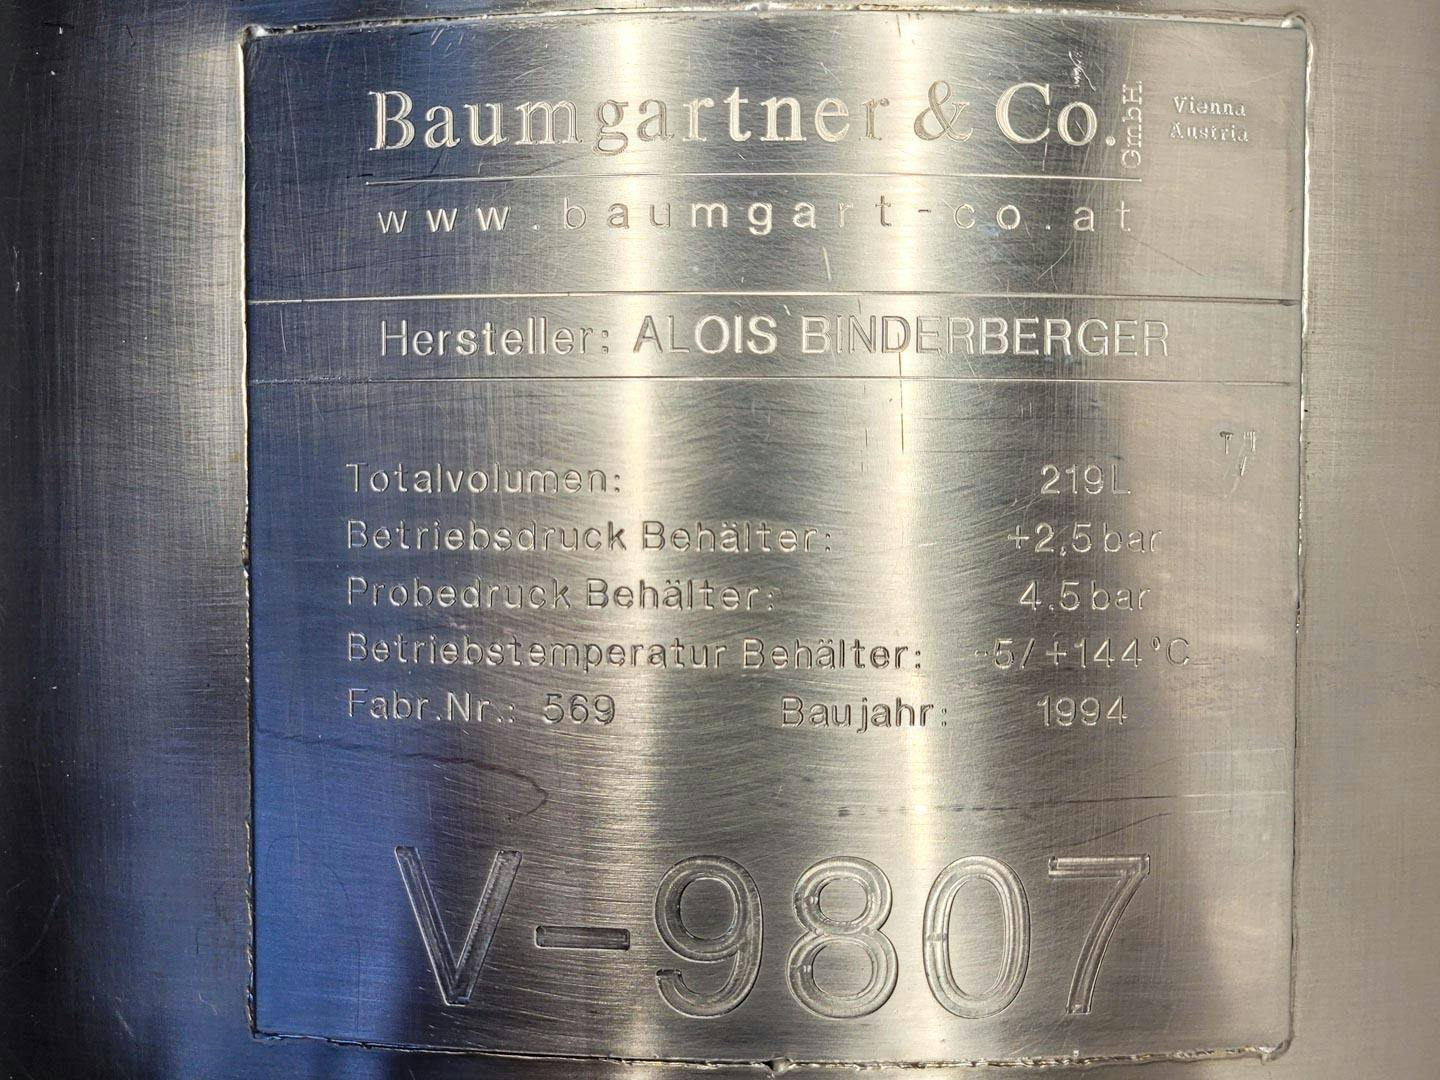 Baumgartner 219 Ltr. - Drukketel - image 10